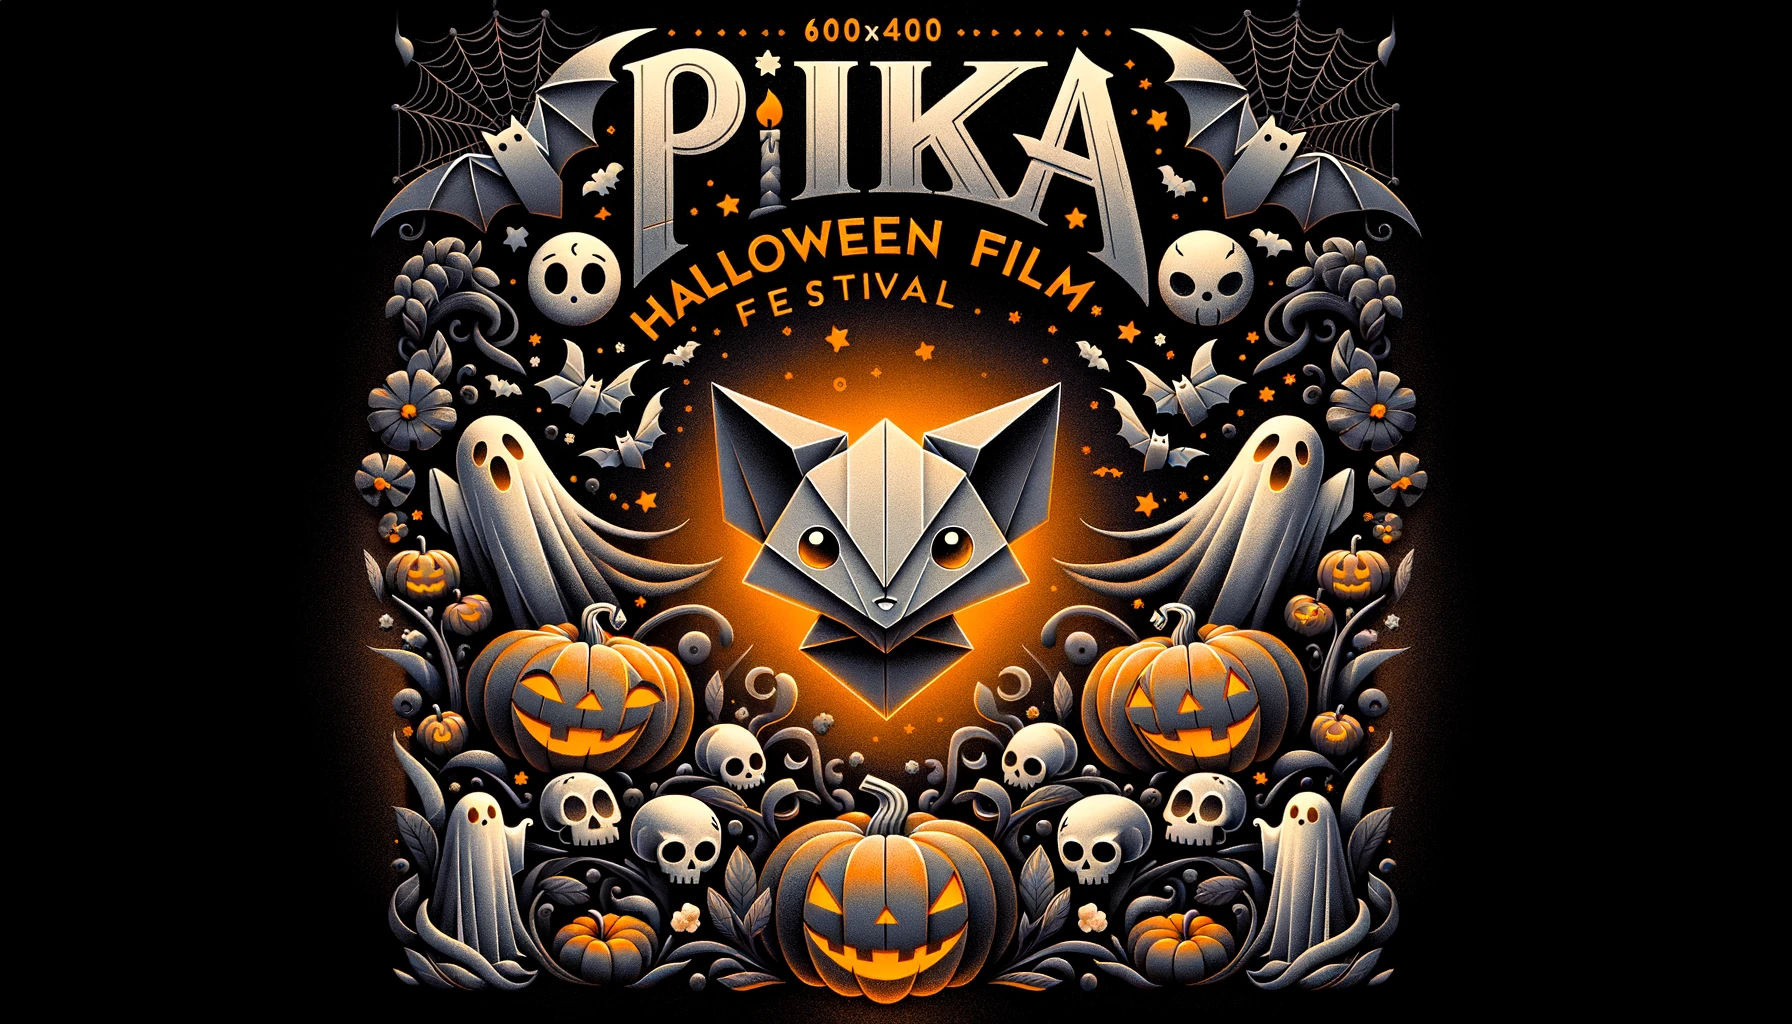 Pika Halloween Film Festival